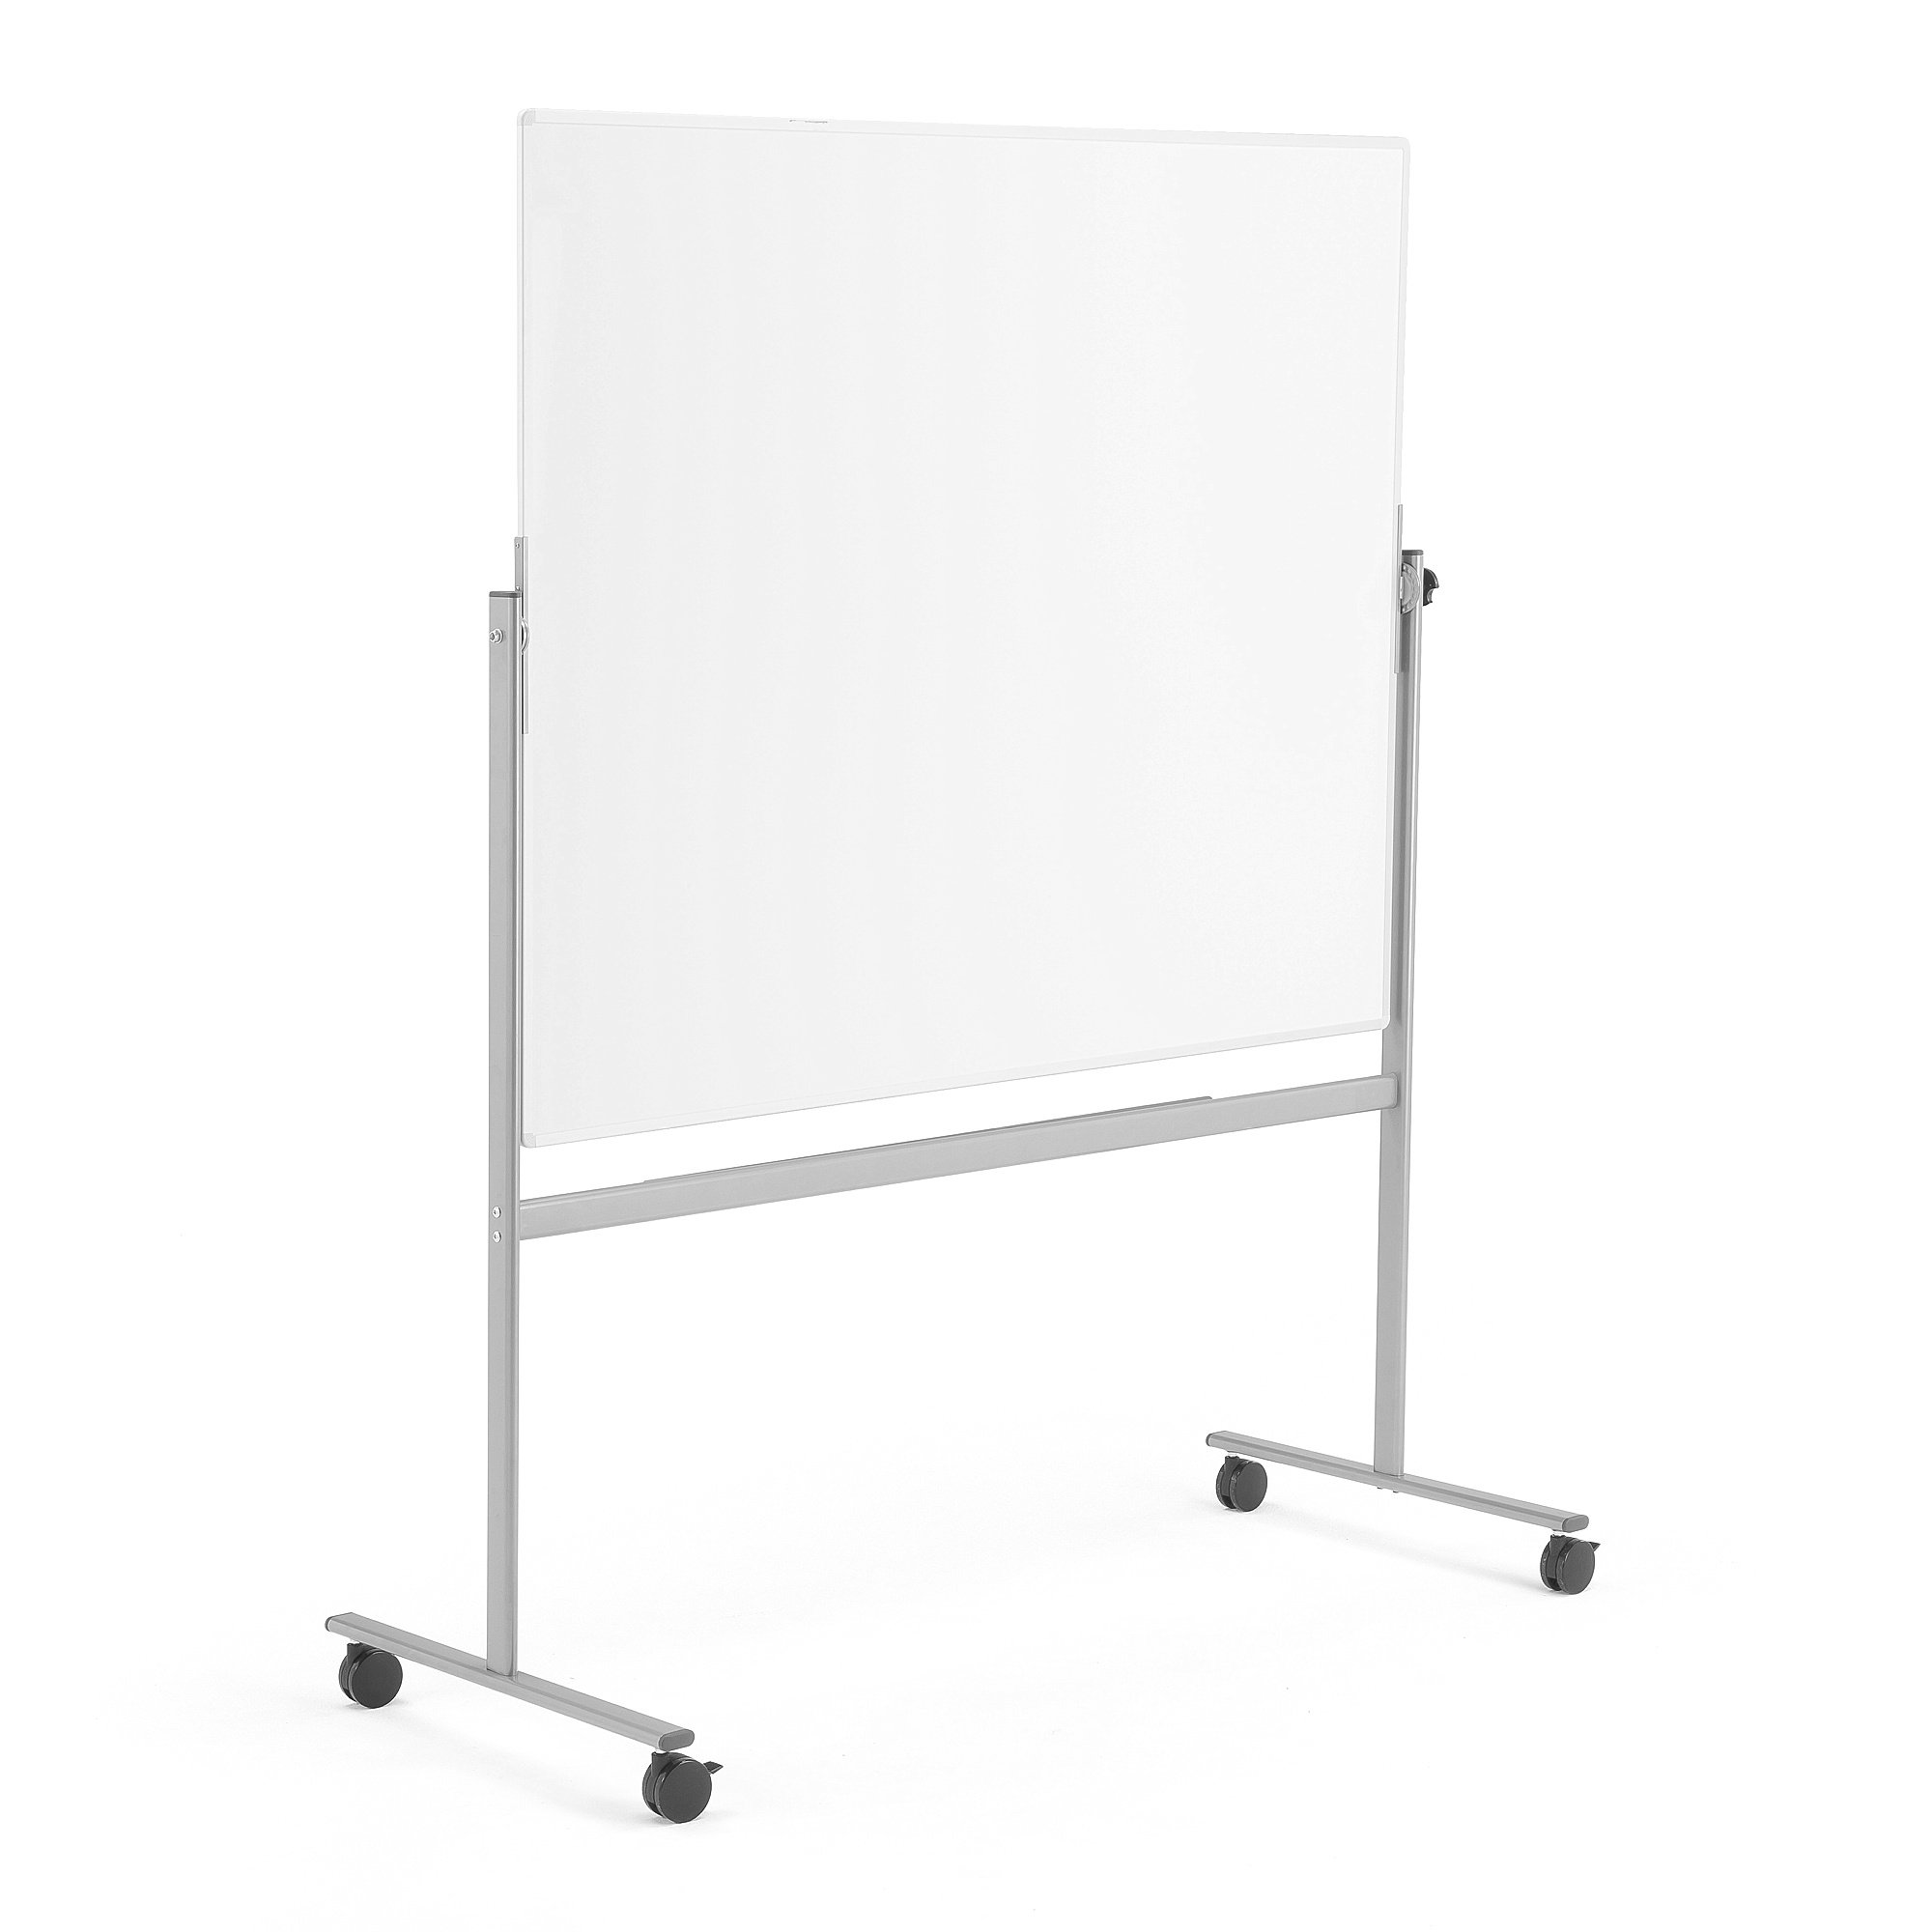 E-shop Biela magnetická tabuľa s kolieskami DORIS, obojstranná, 1500x1200 mm